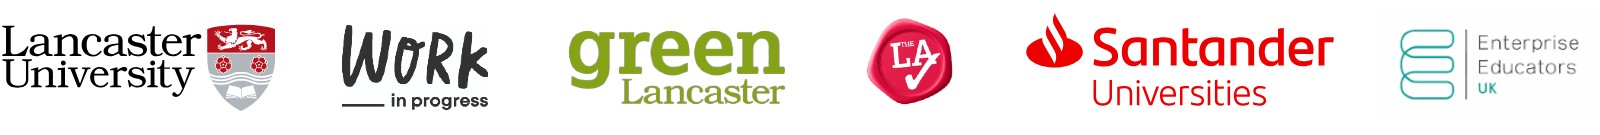 Partner Logos, Lancaster University, Green Lancaster, Work in Progress, Santander and Enterprise